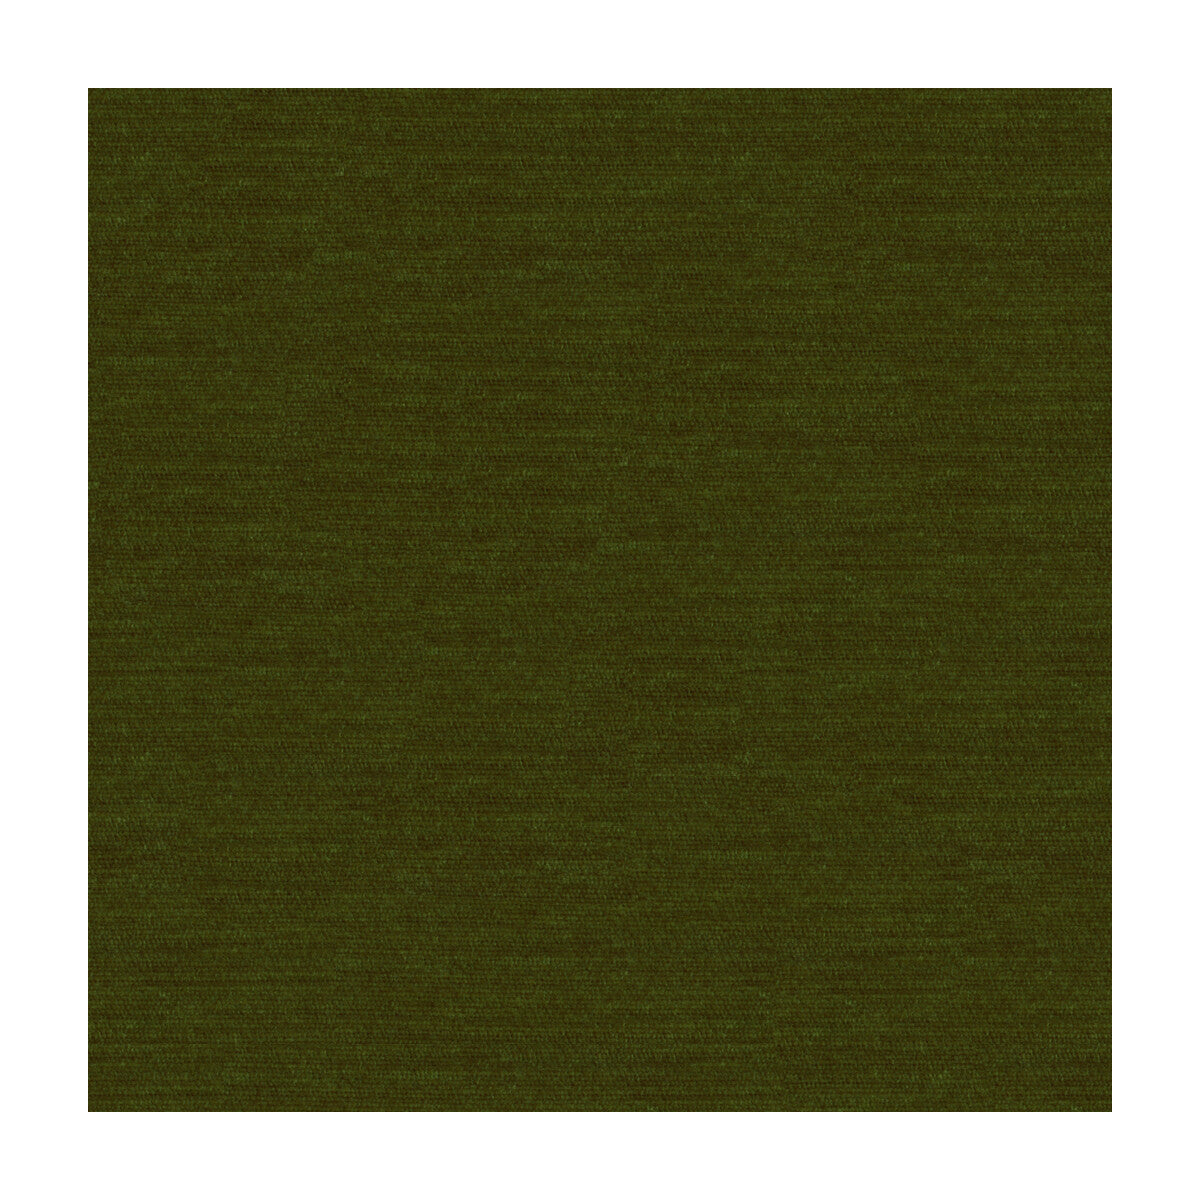 Kravet Smart fabric in 32962-3 color - pattern 32962.3.0 - by Kravet Smart